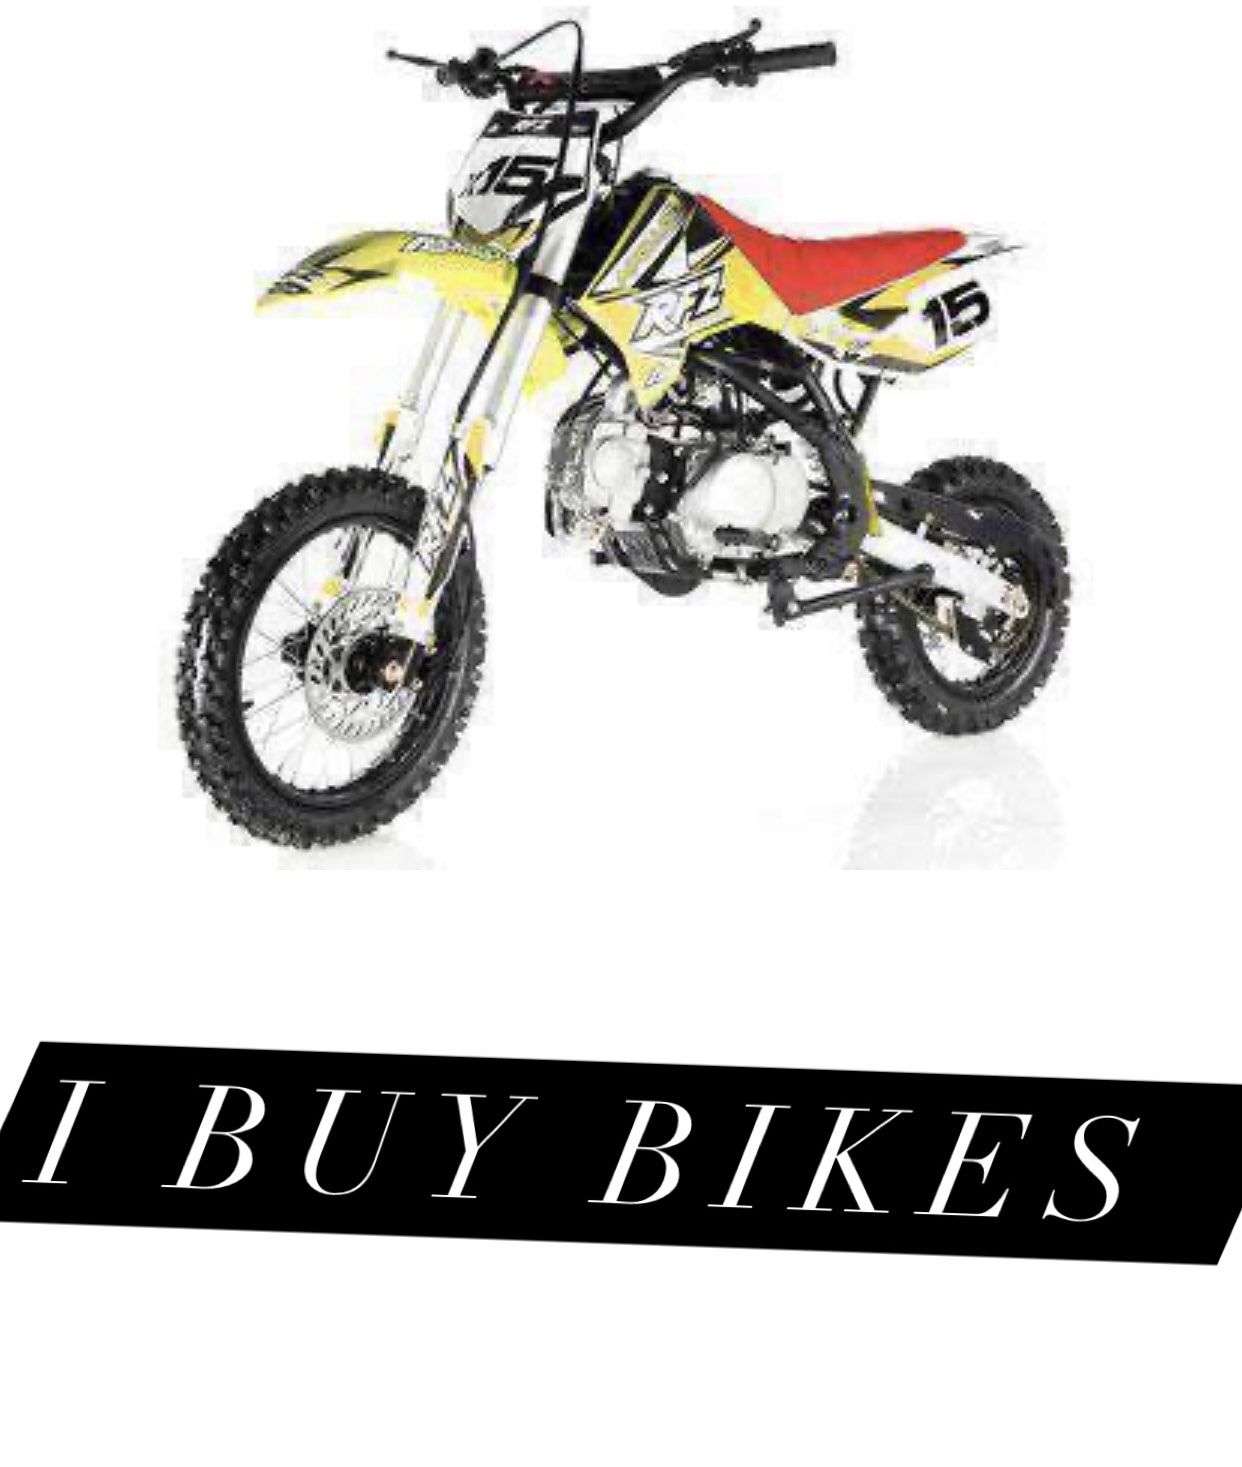 I buy bikes. Message me